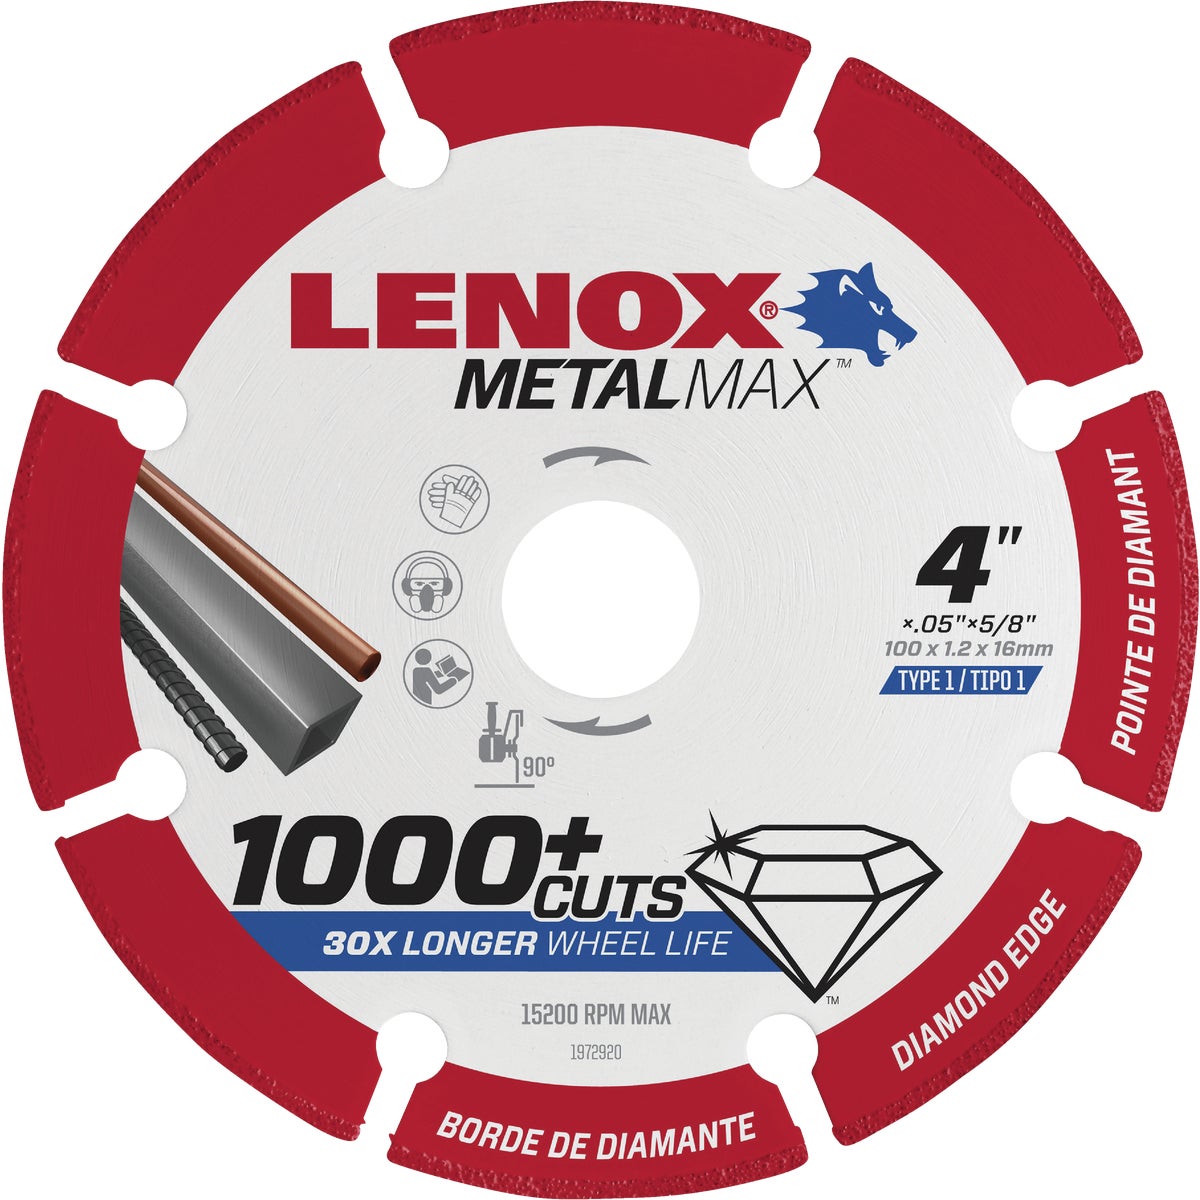 Lenox MetalMax 4 In. Segmented Rim Dry Cut Diamond Blade with 5/8 In. Arbor